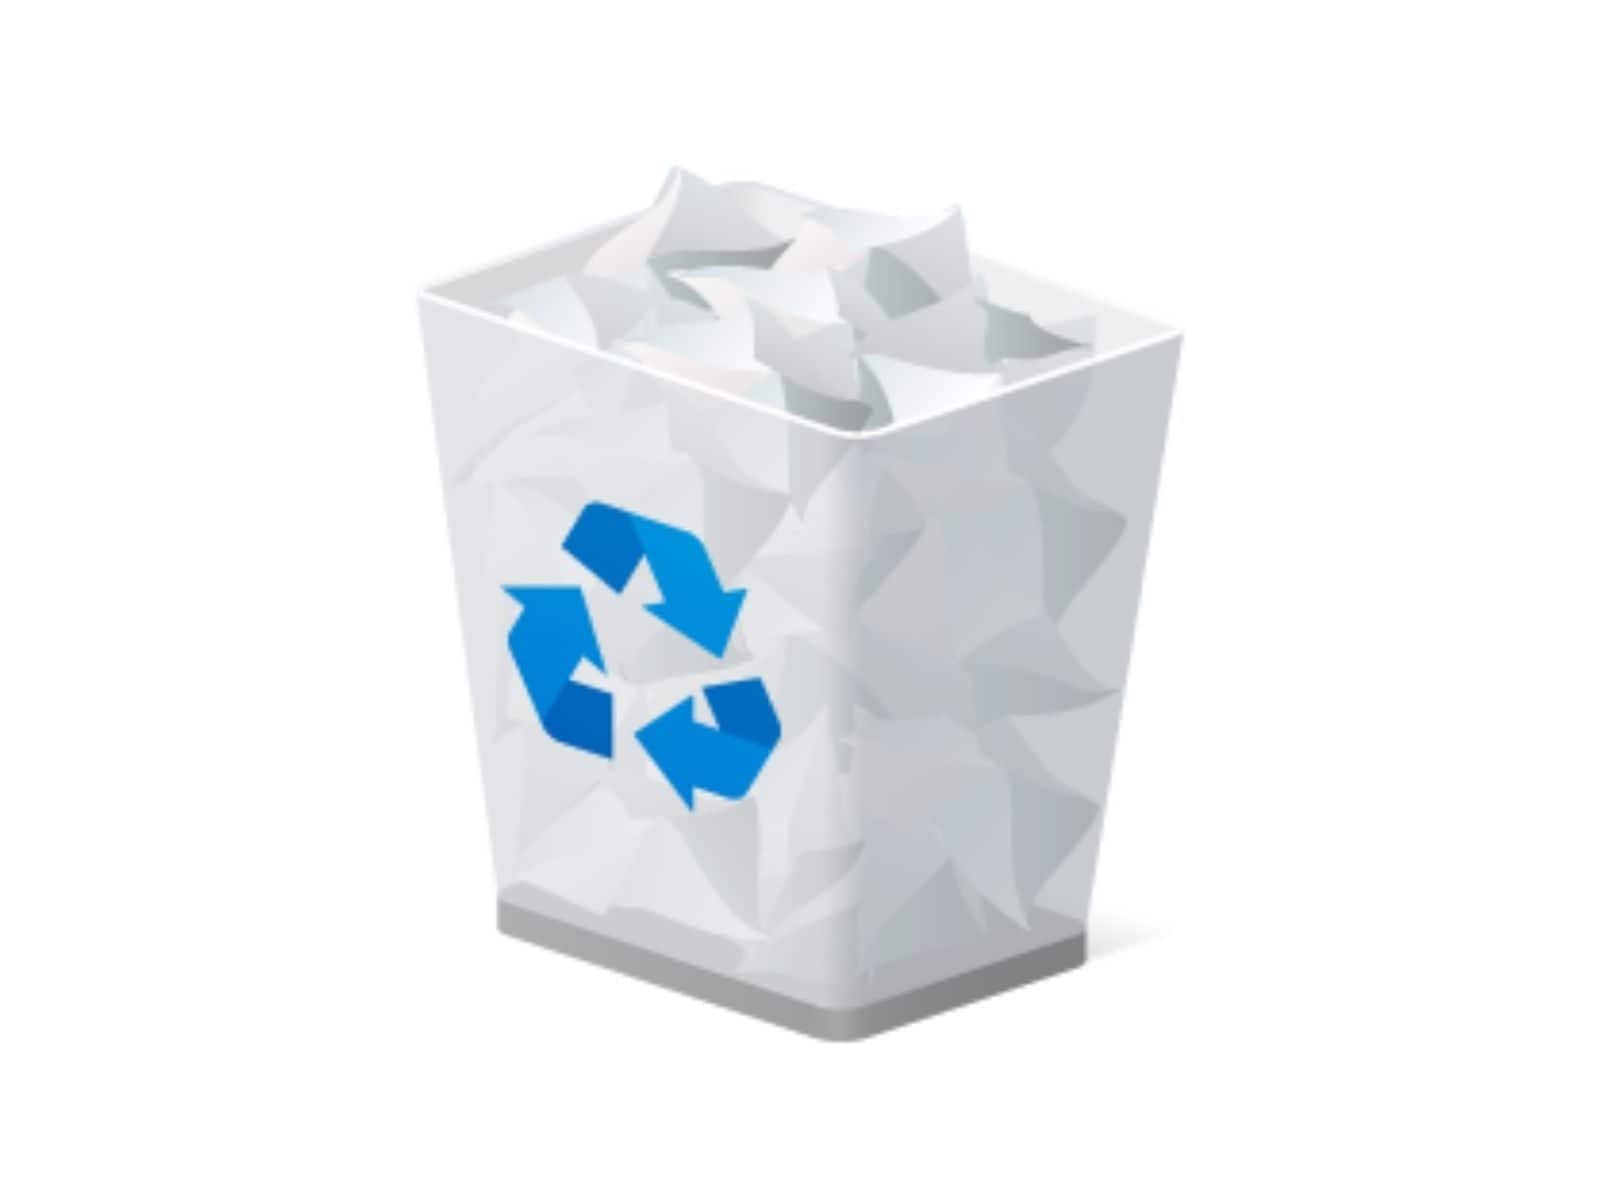 recycle bin icon windows 7